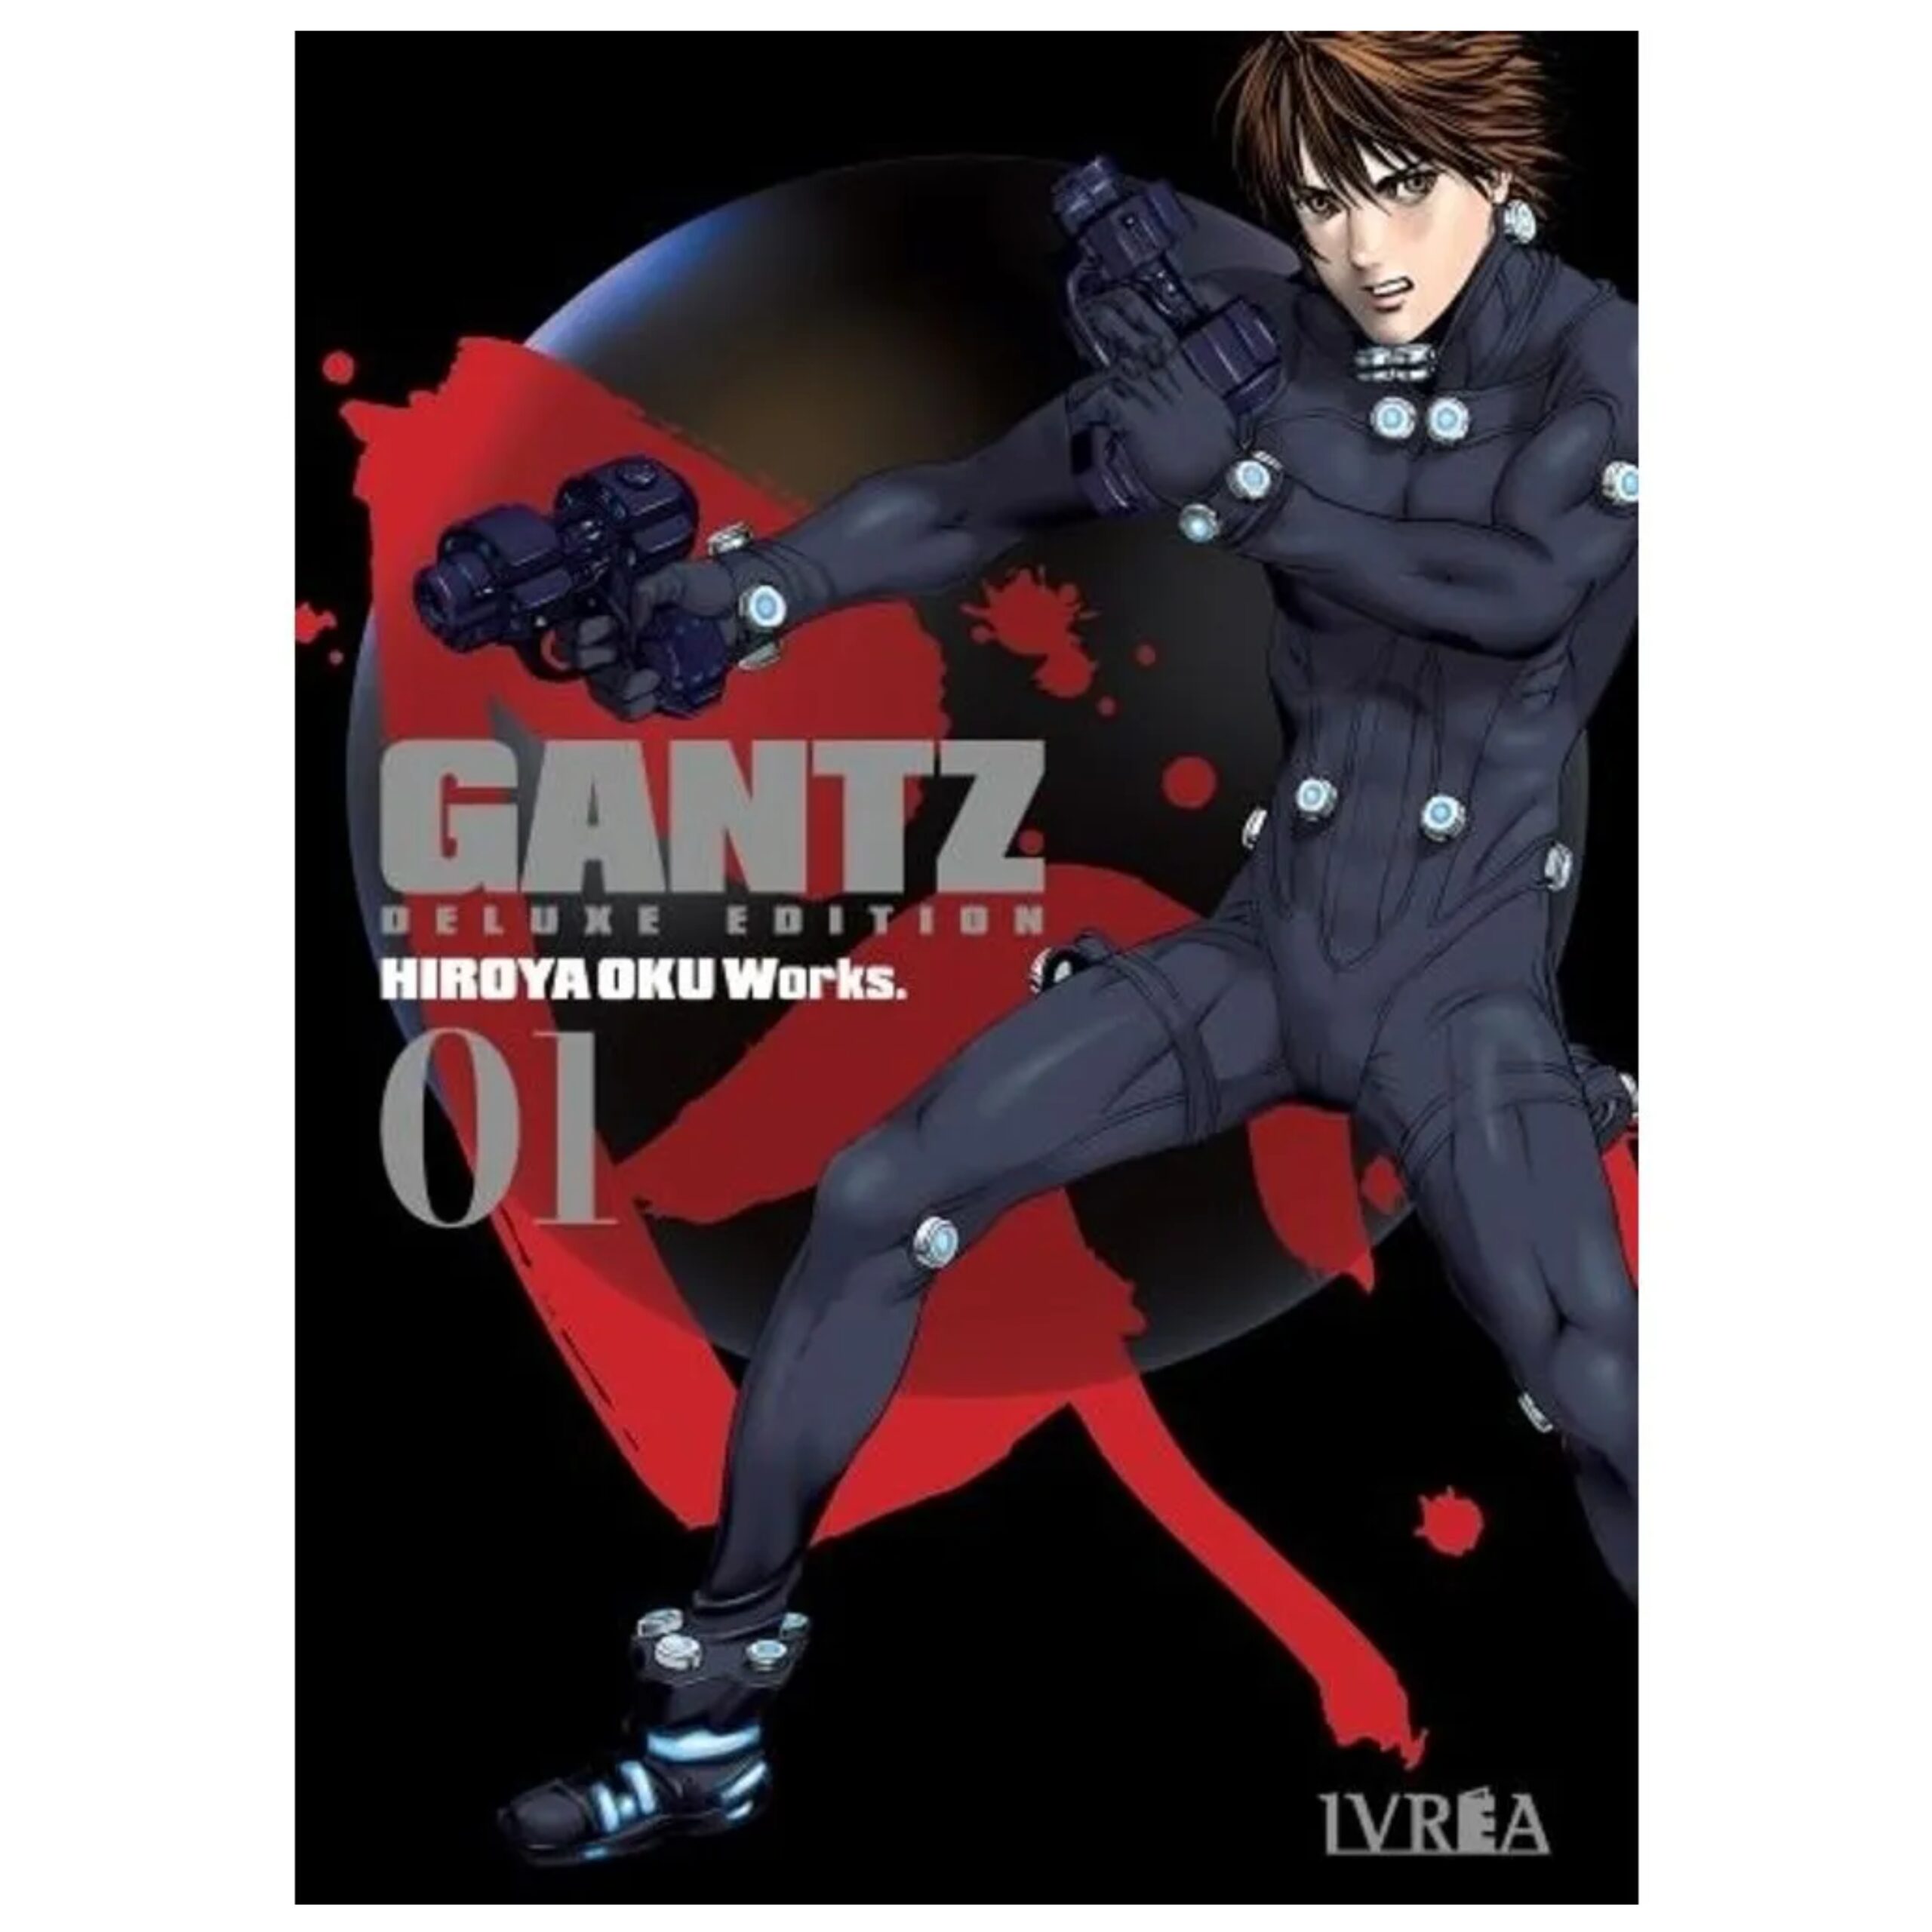 Manga Gantz Deluxe Edition N.1 Ivrea Anime ESP